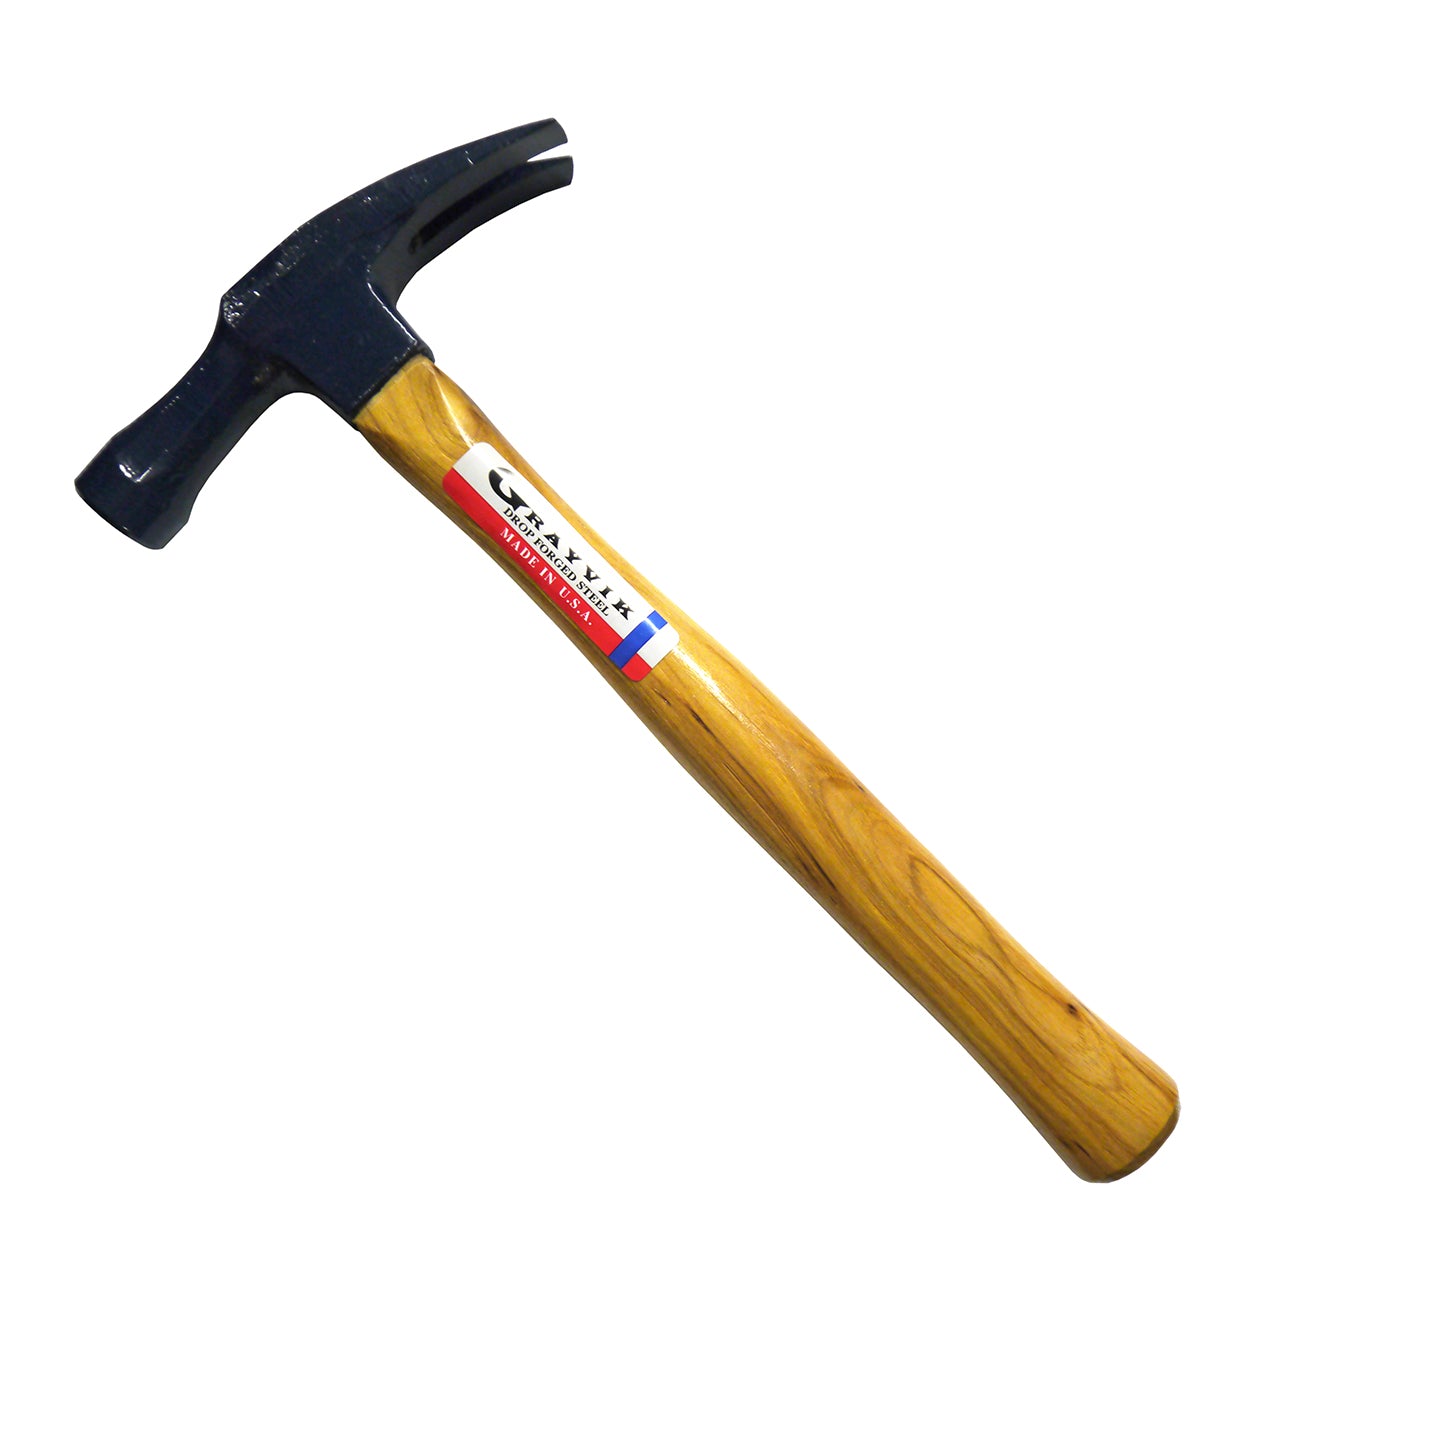 18 oz Electrician's Wood Handled Hammer (90107)